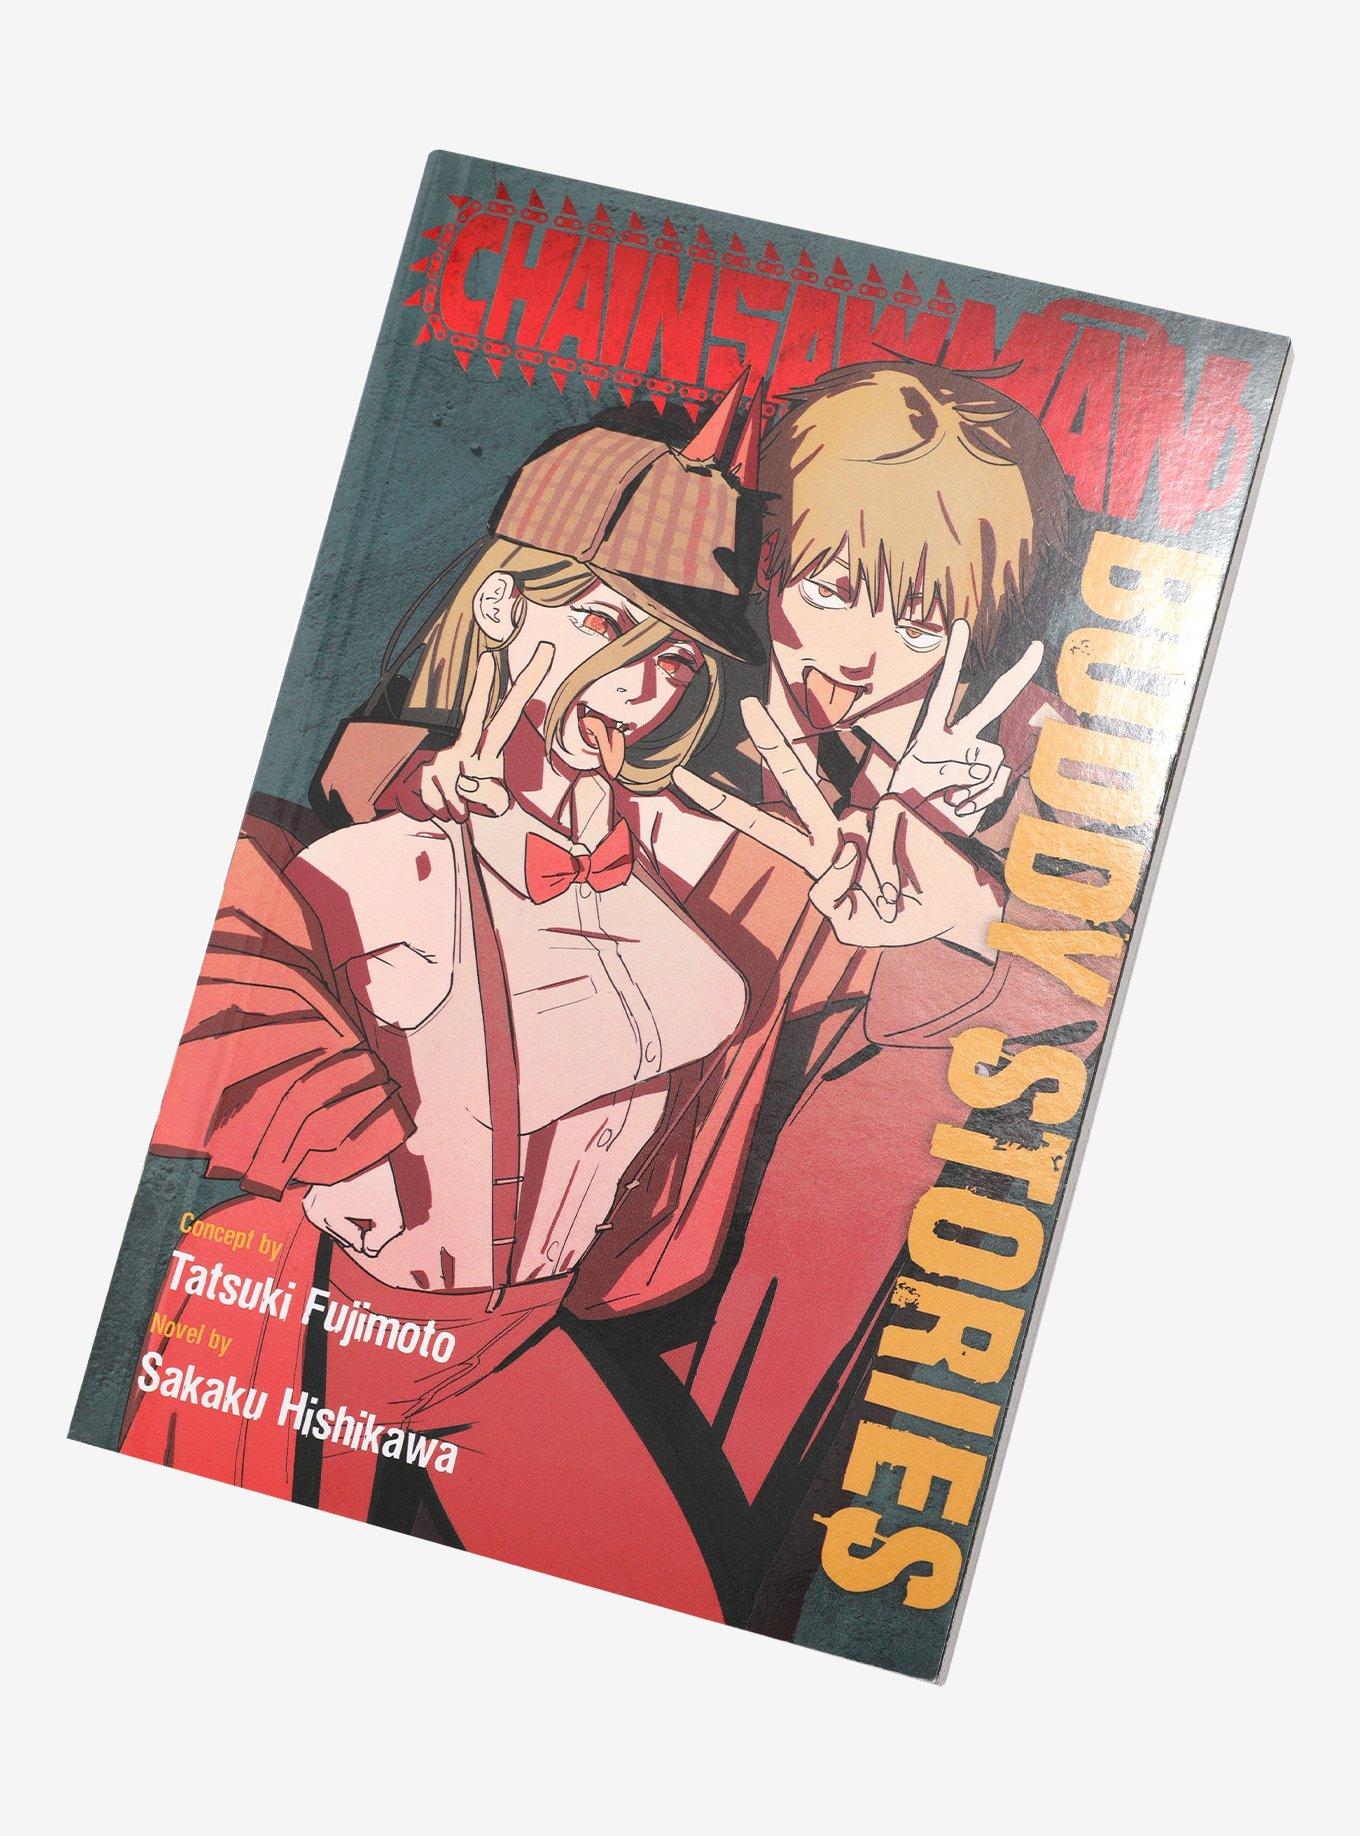 Chainsaw Man Buddy Stories - Light novel based on the manga - ISBN